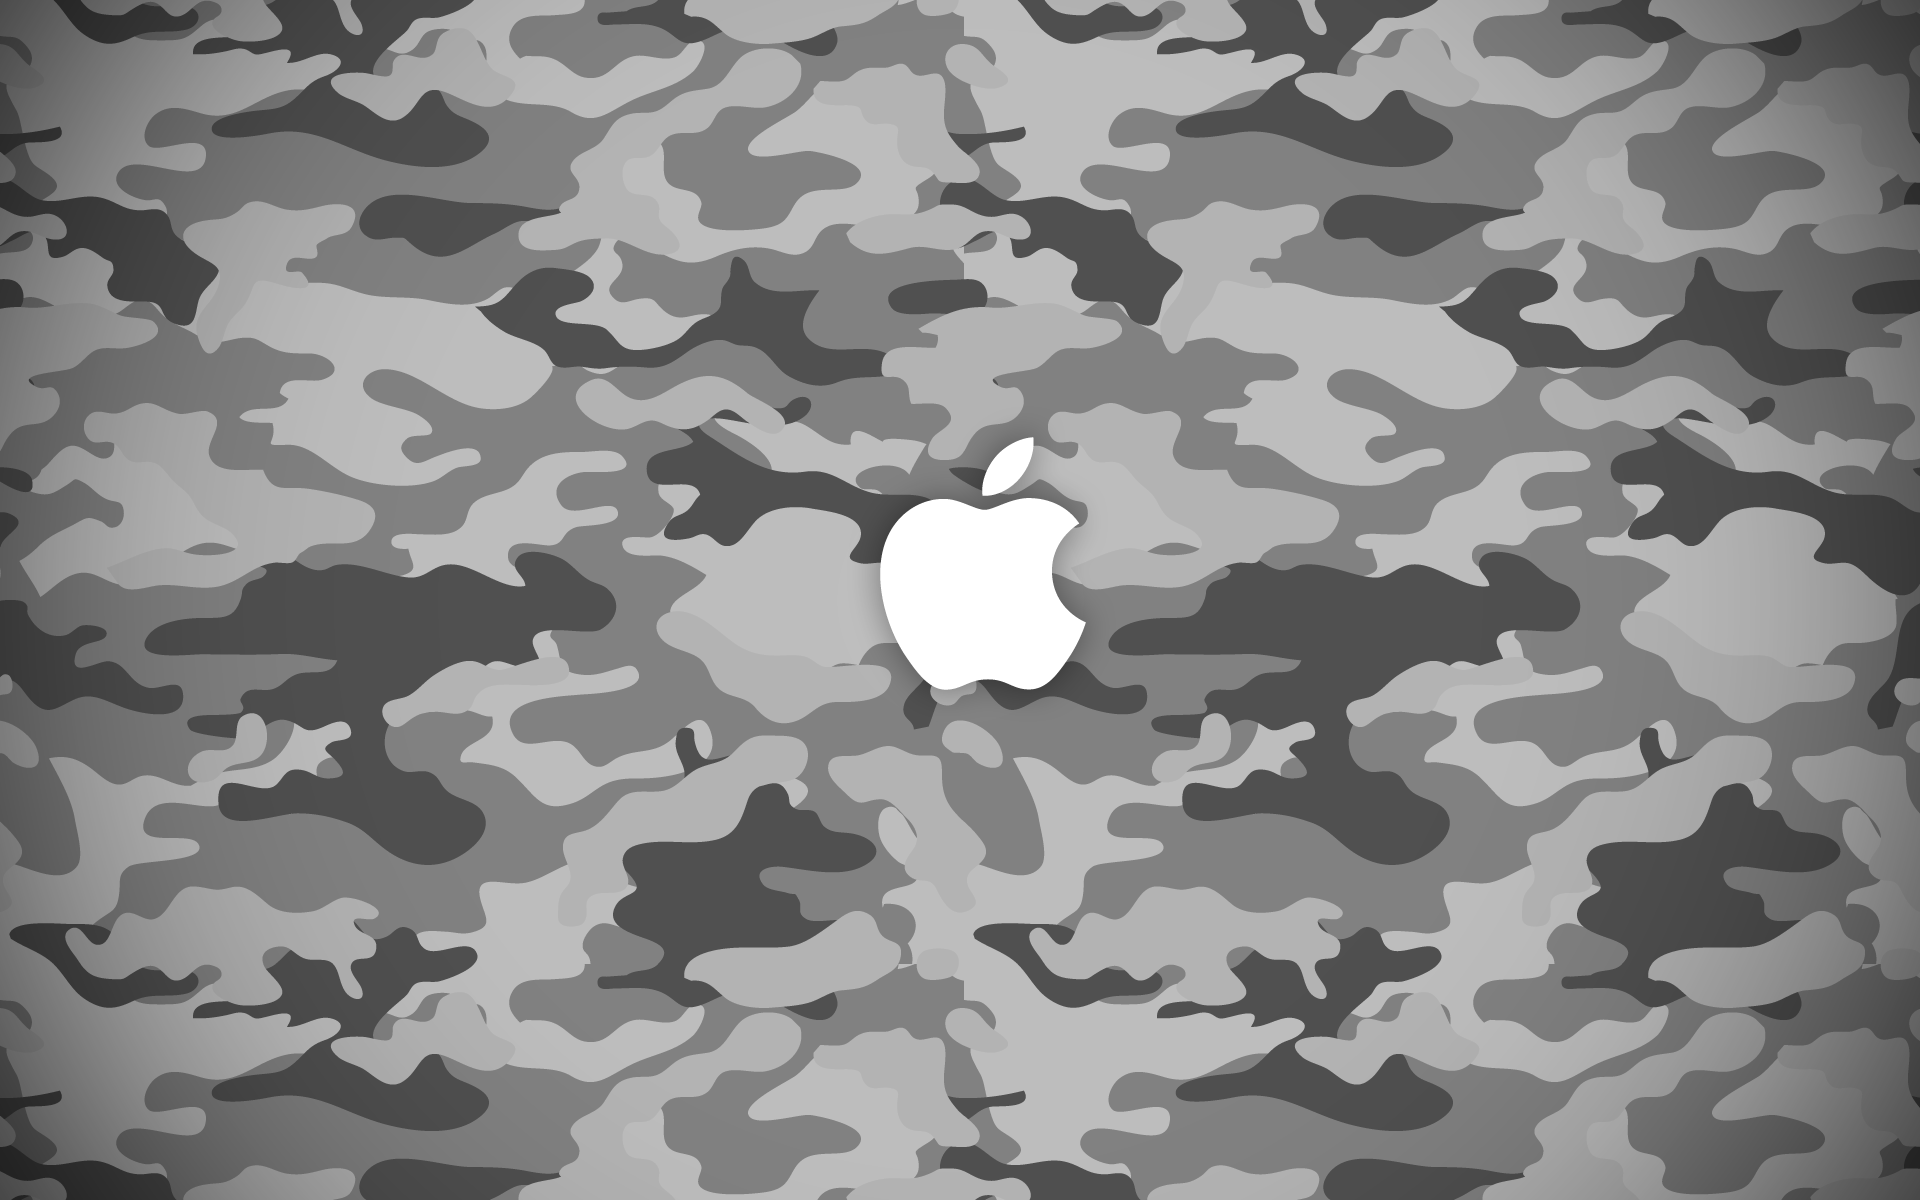 Camouflage Background